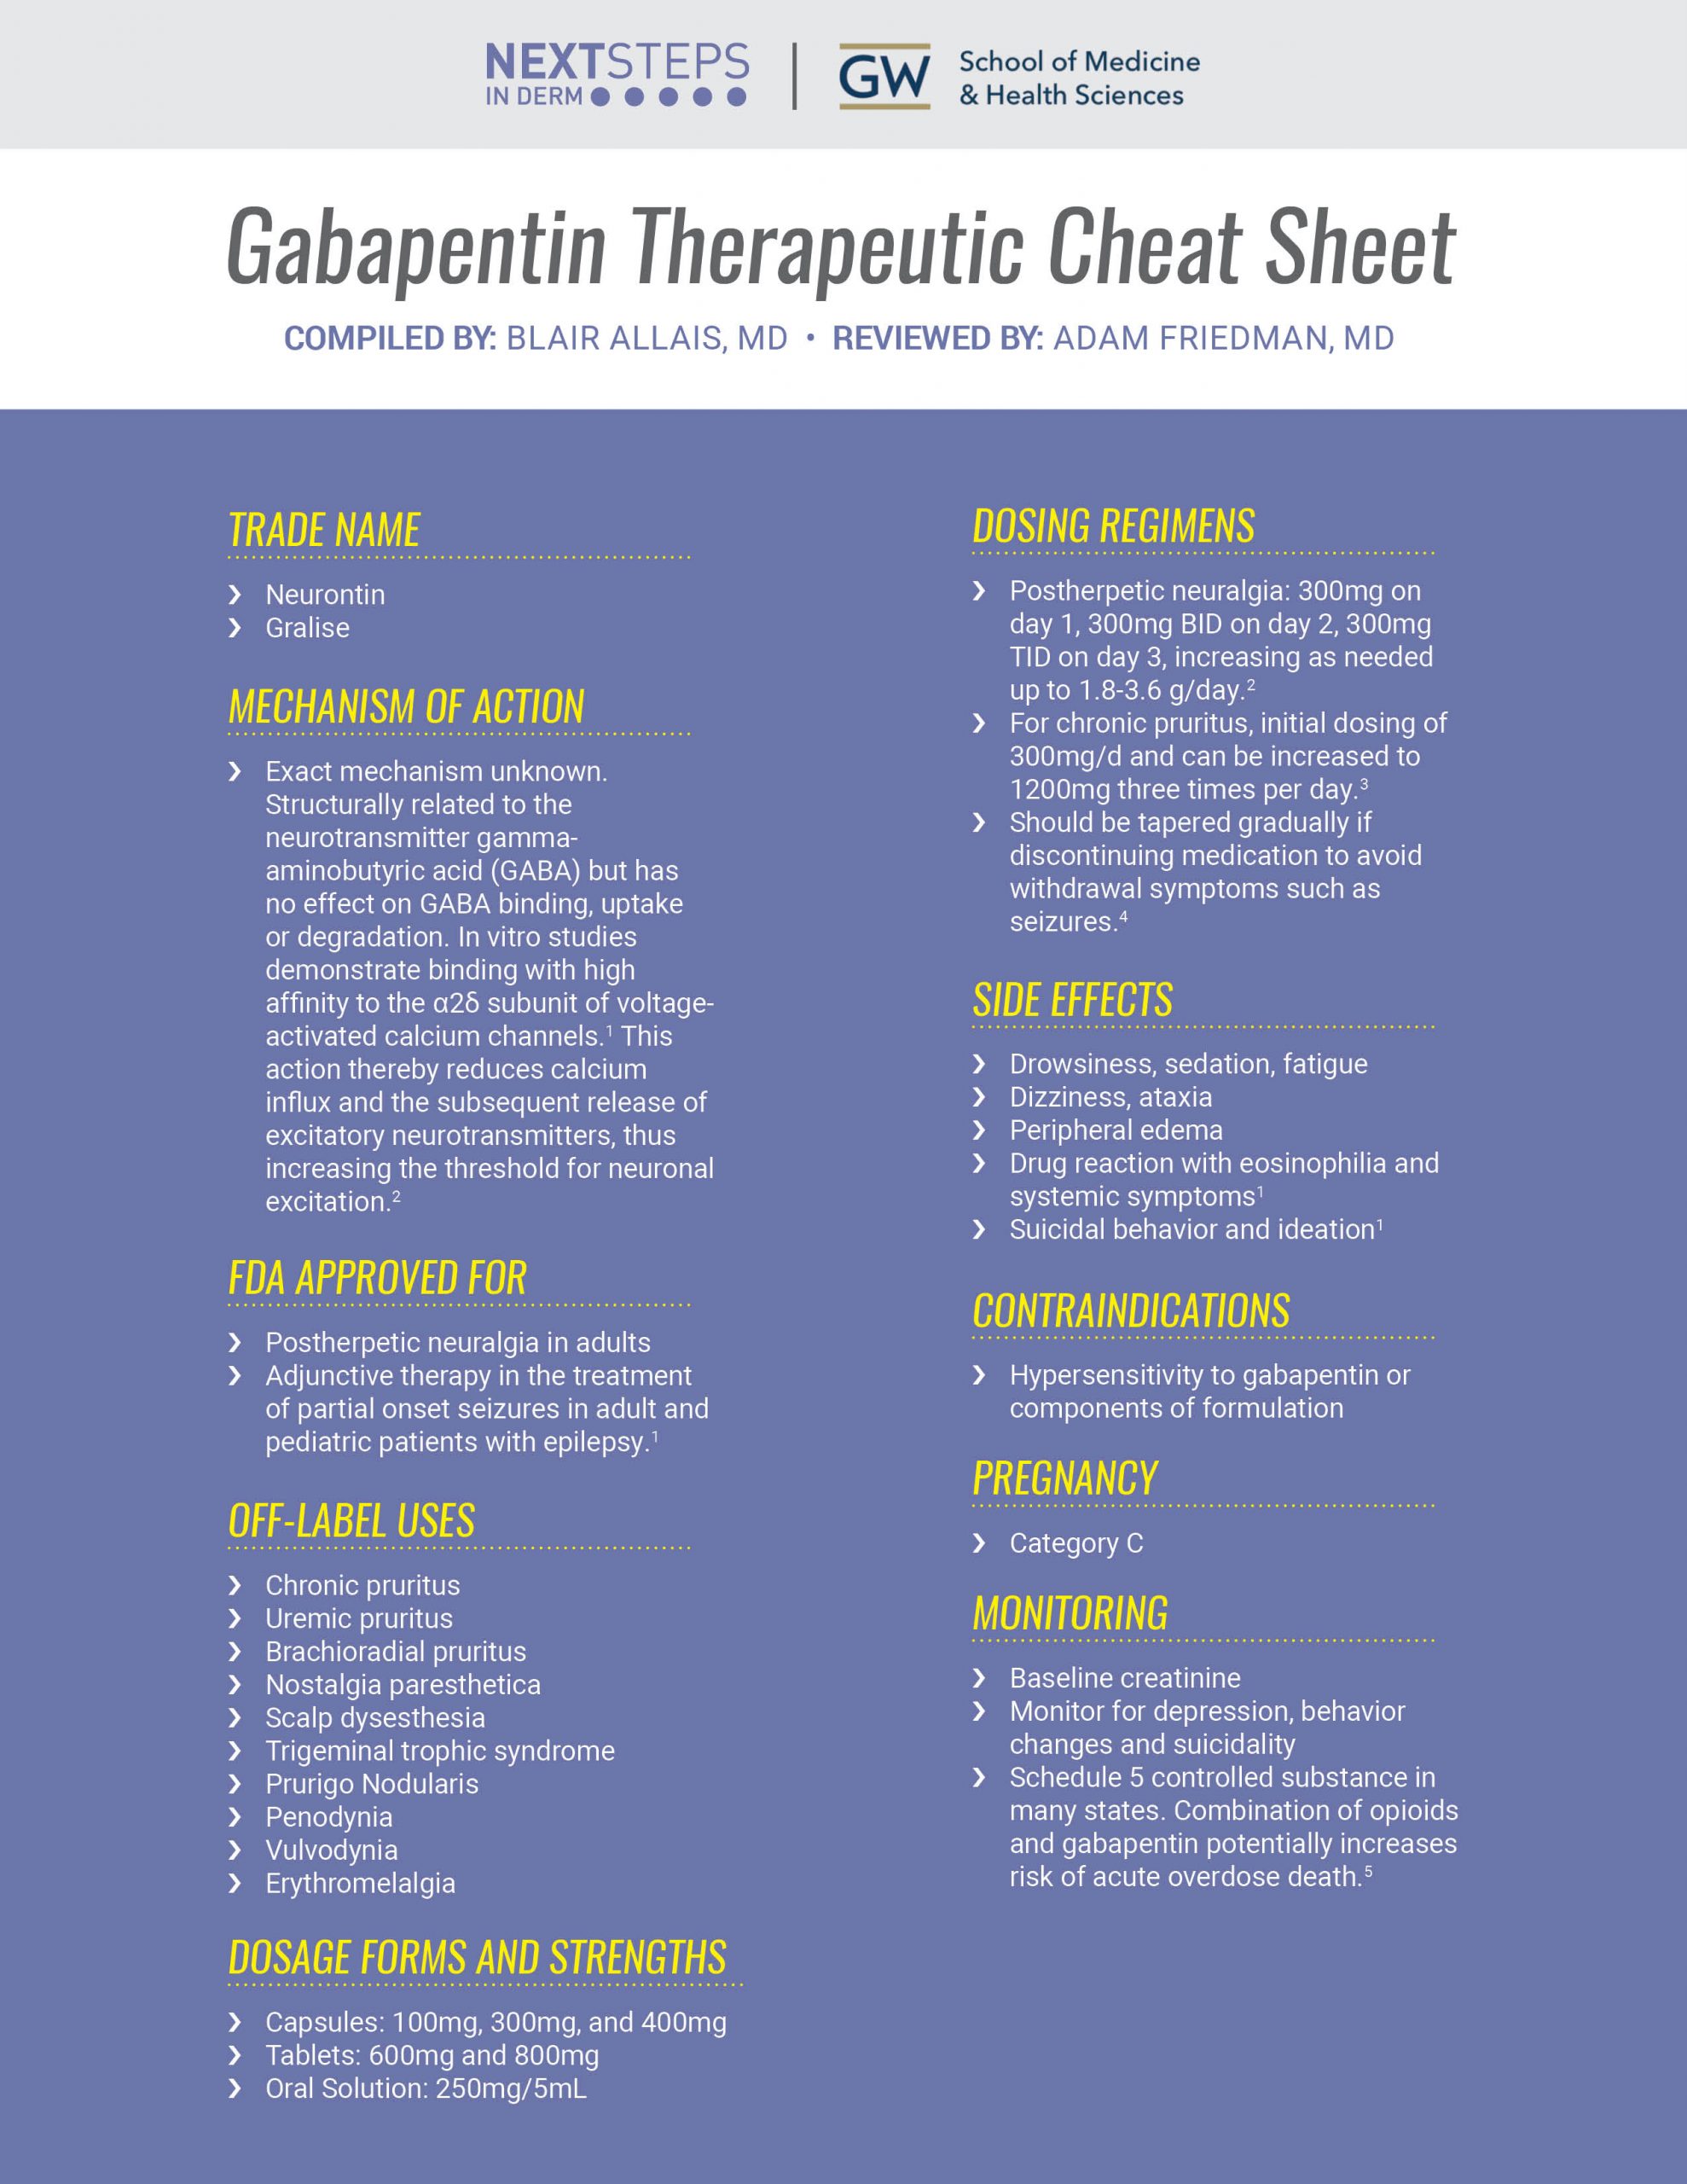 Gabapentin use in dermatology